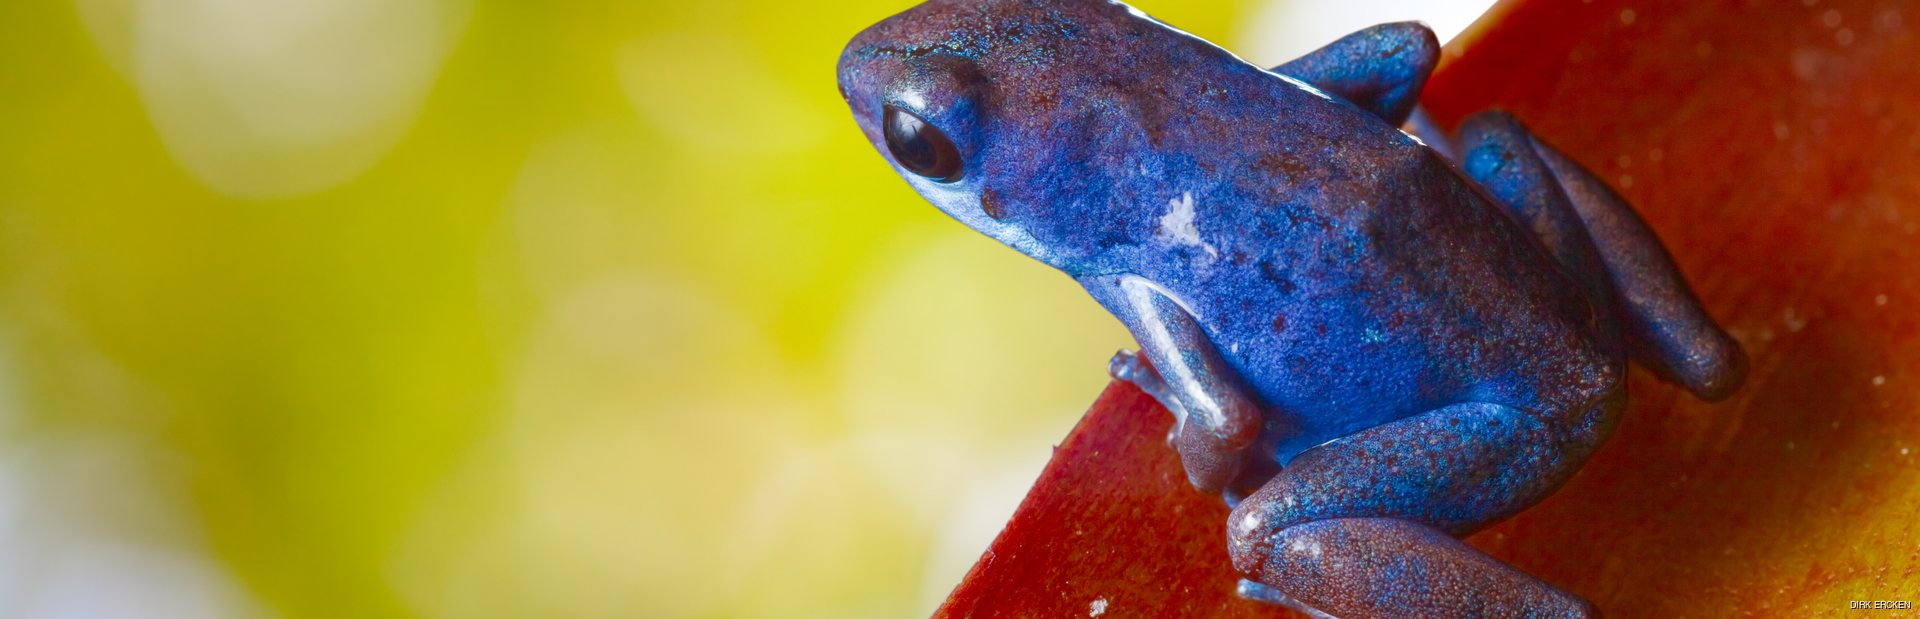 Poison frog on the red leaf